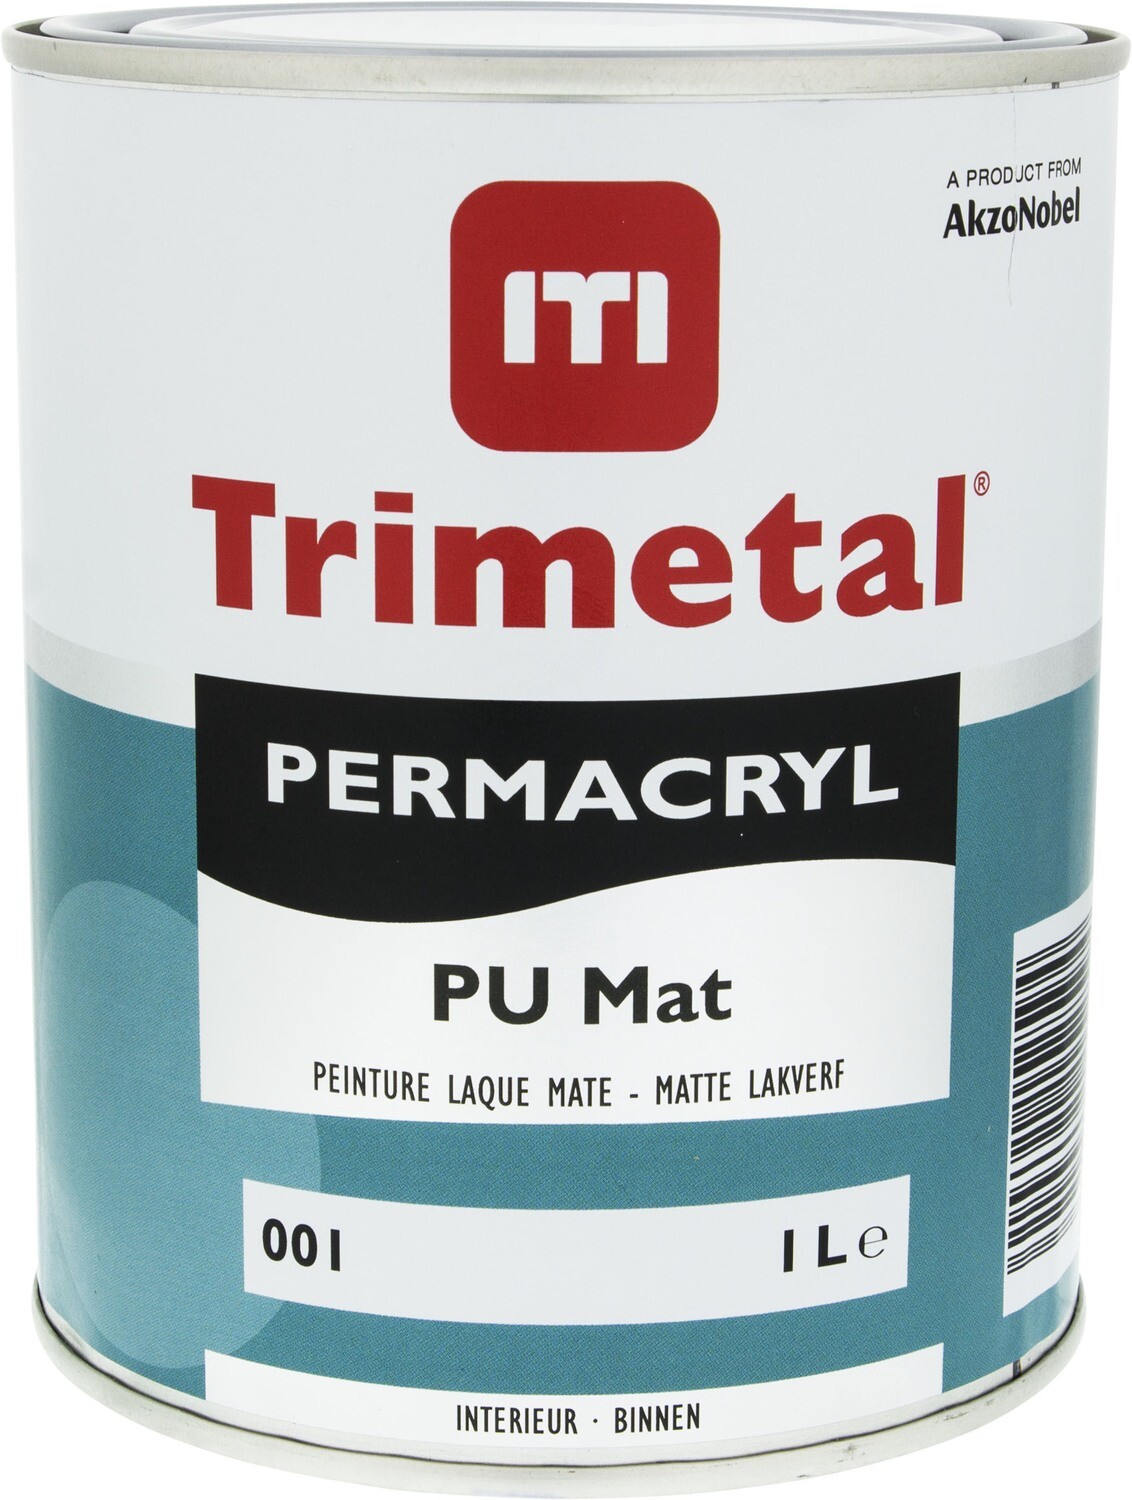 Trimetal Permacryl PU Mat - BLANC